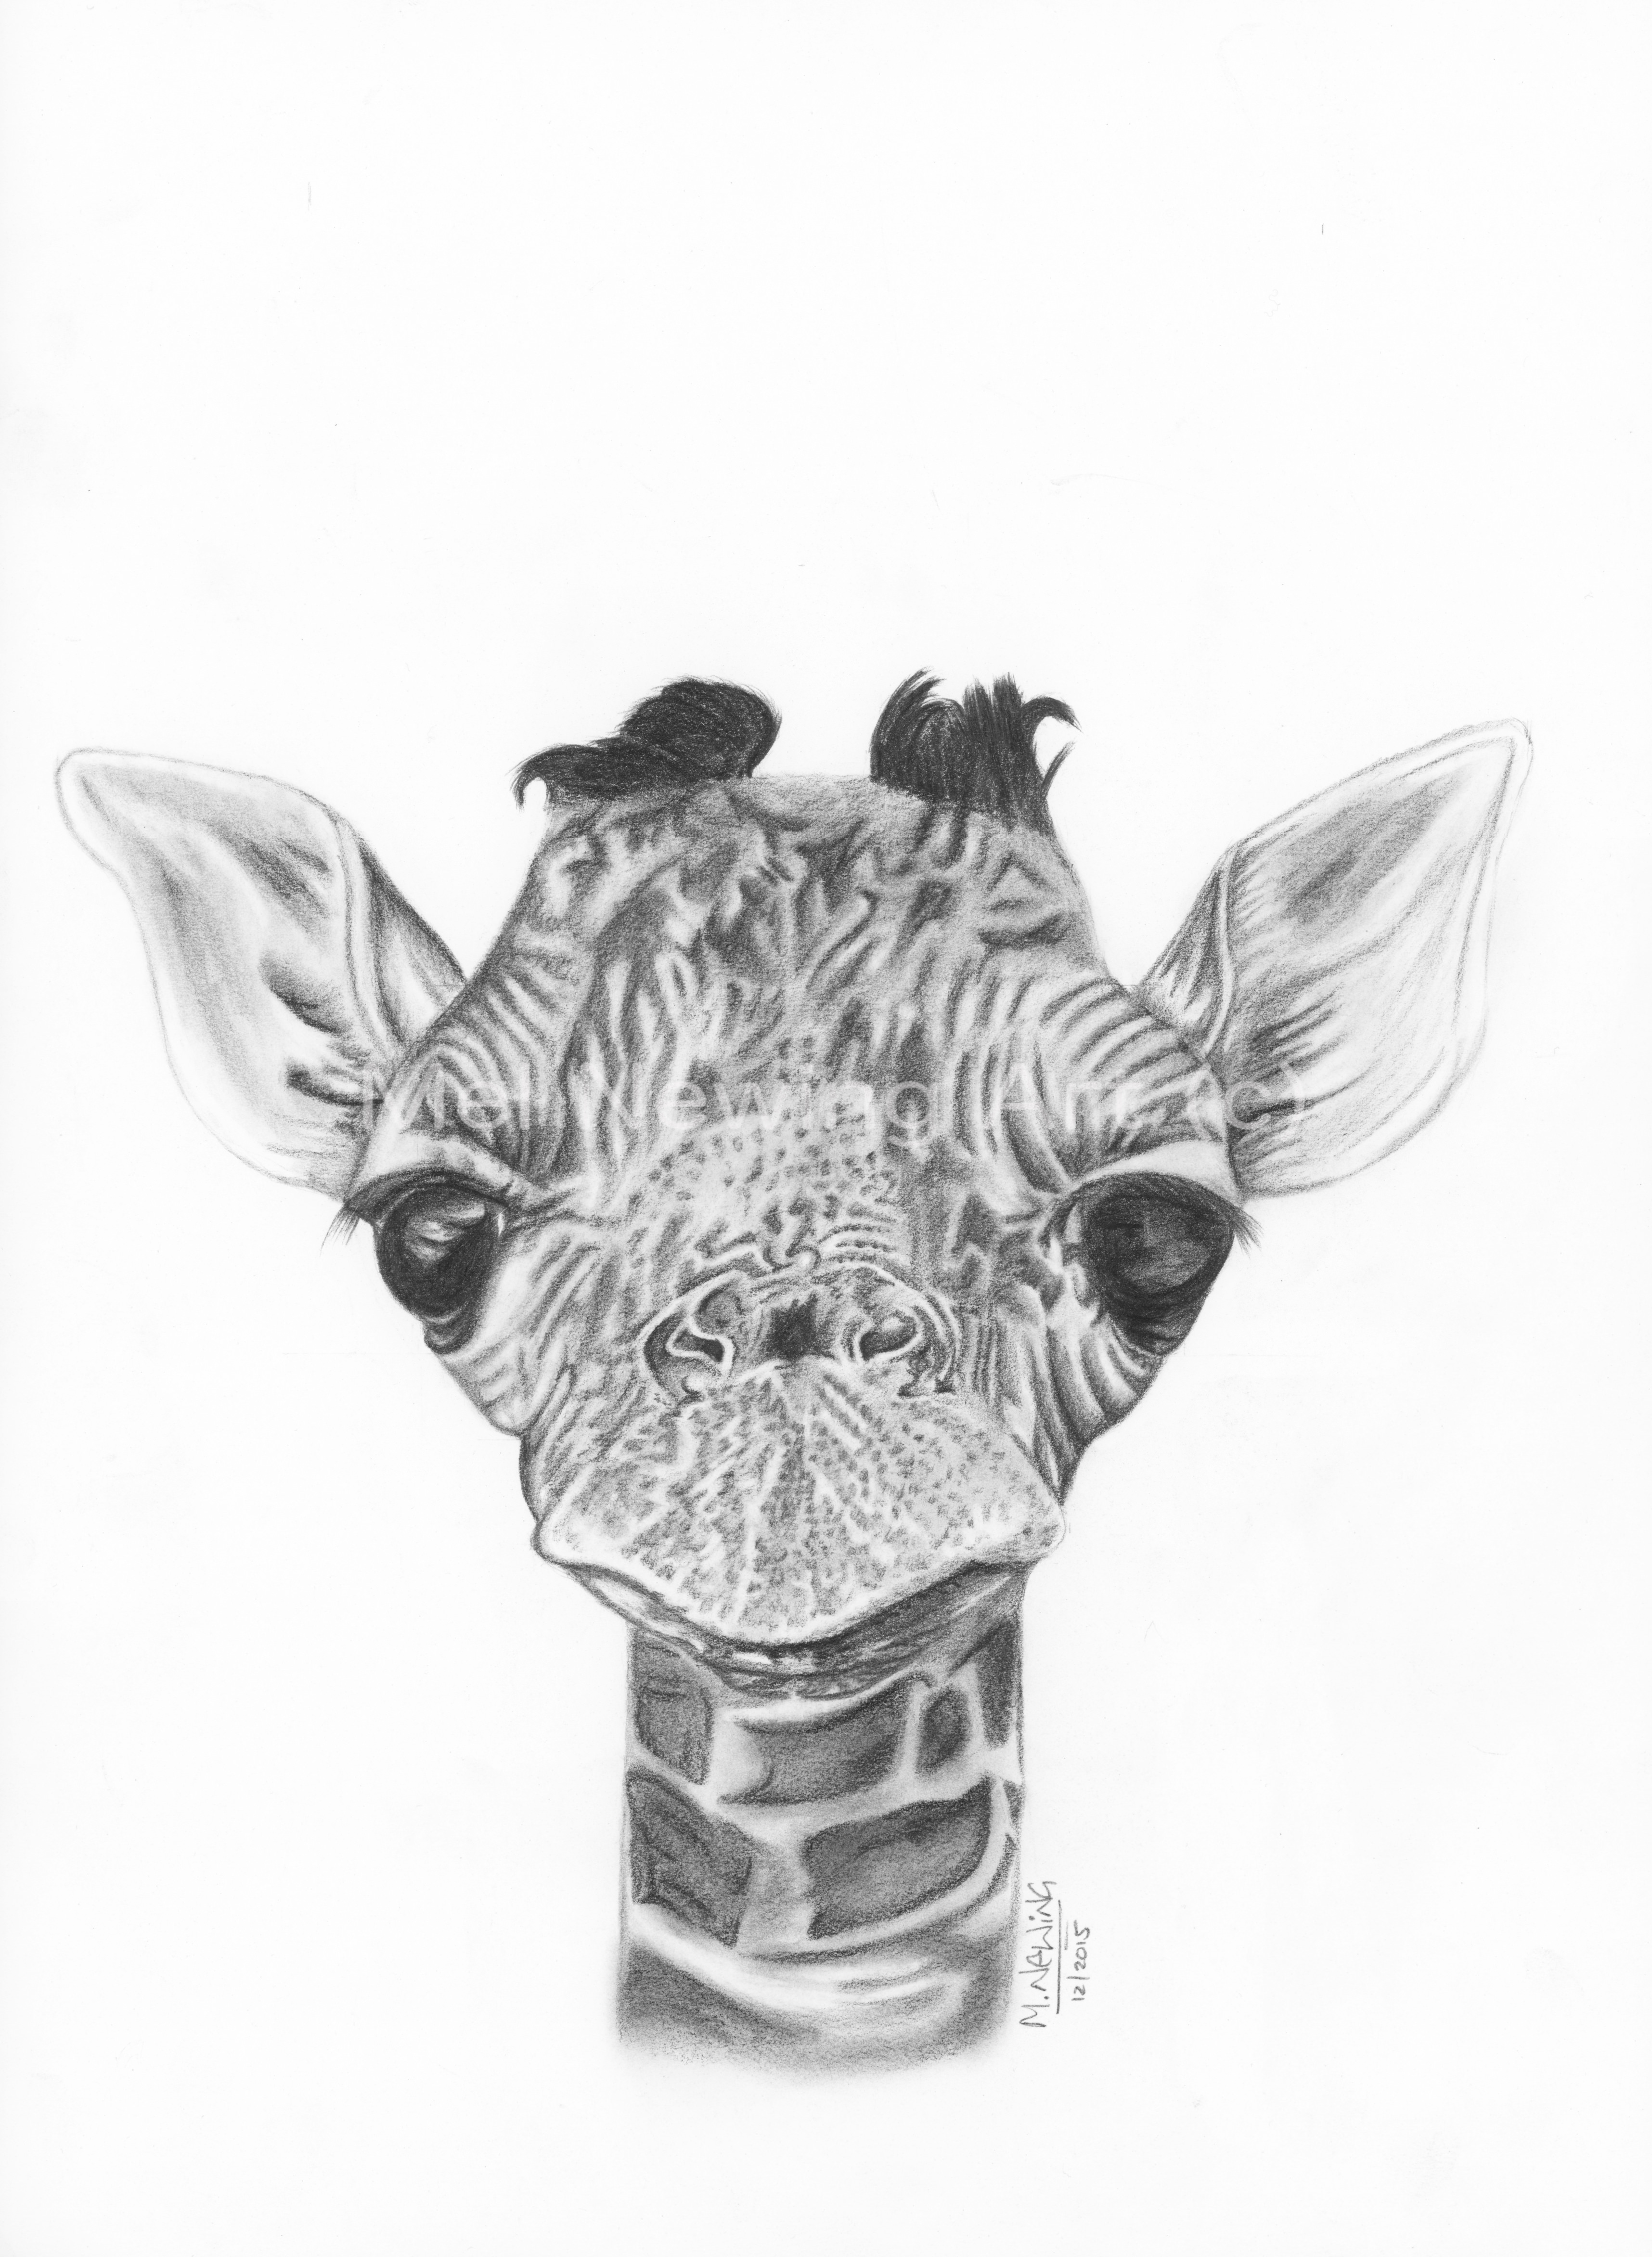 Baby Giraffe drawing in graphite pencil Pet Portraits